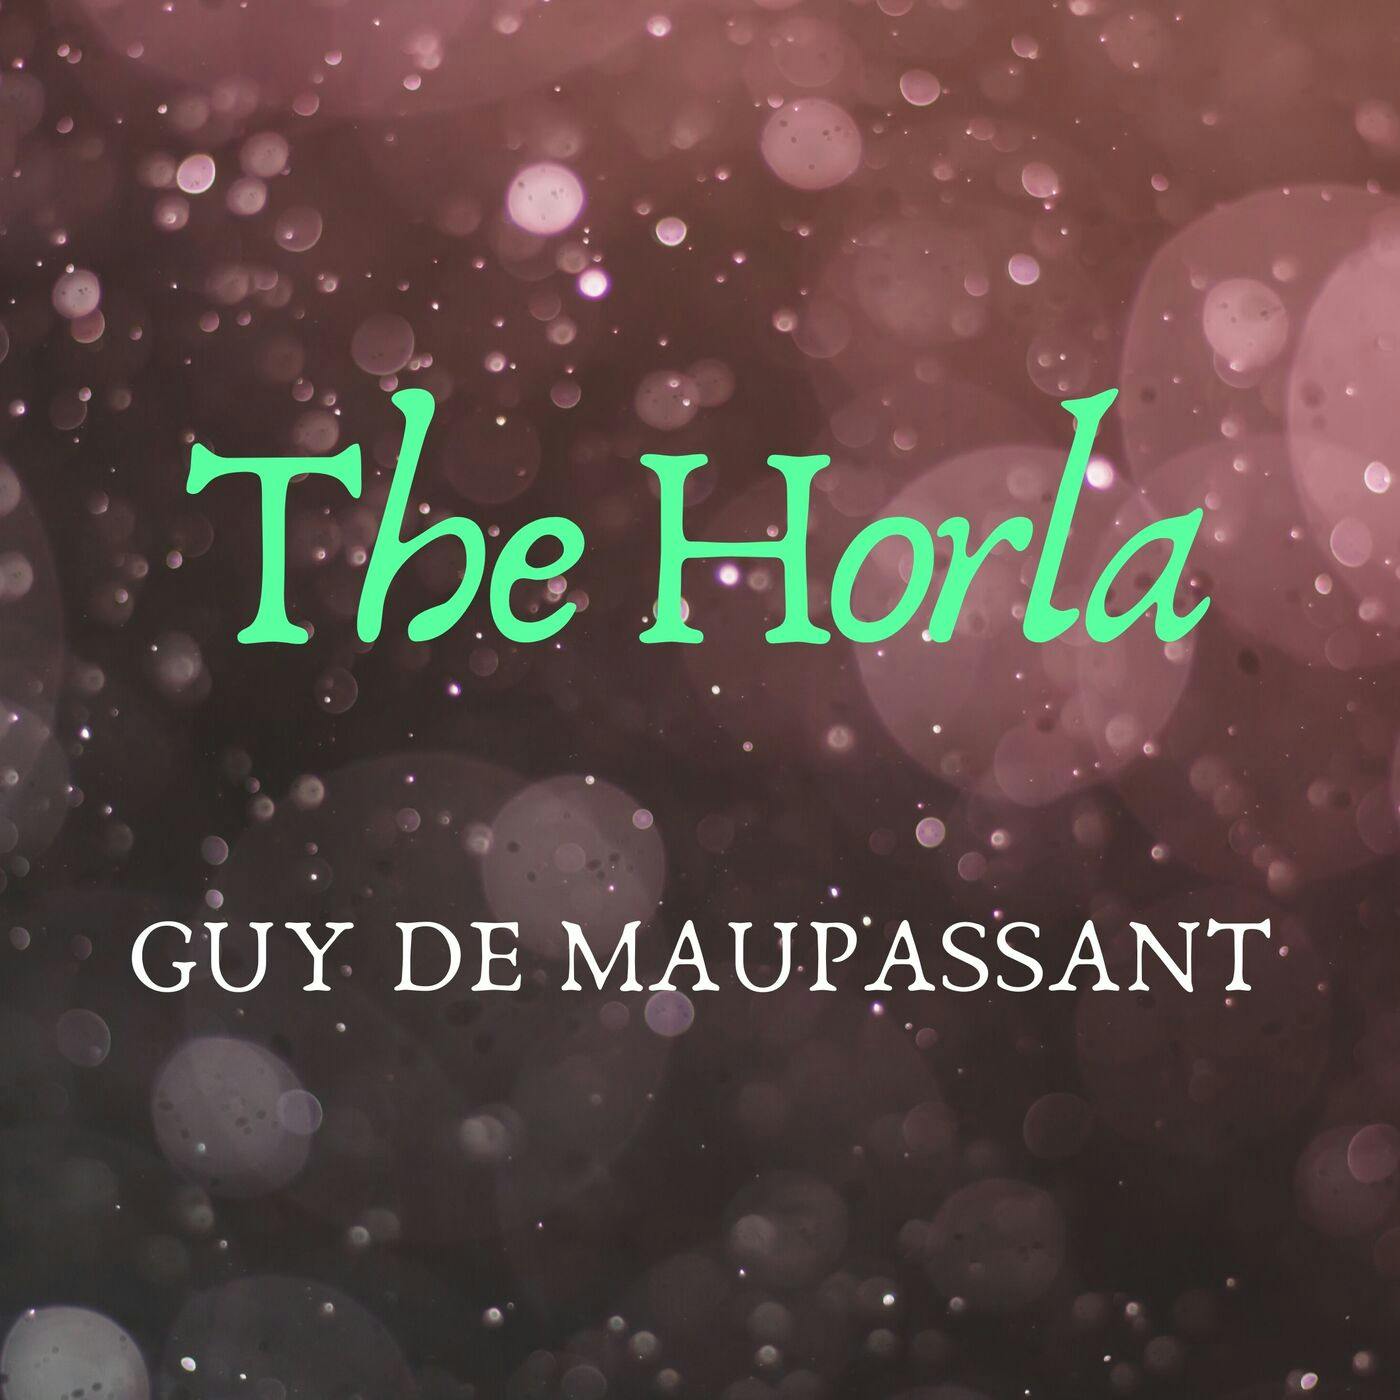 Episode 35: The Horla by Guy de Maupassant